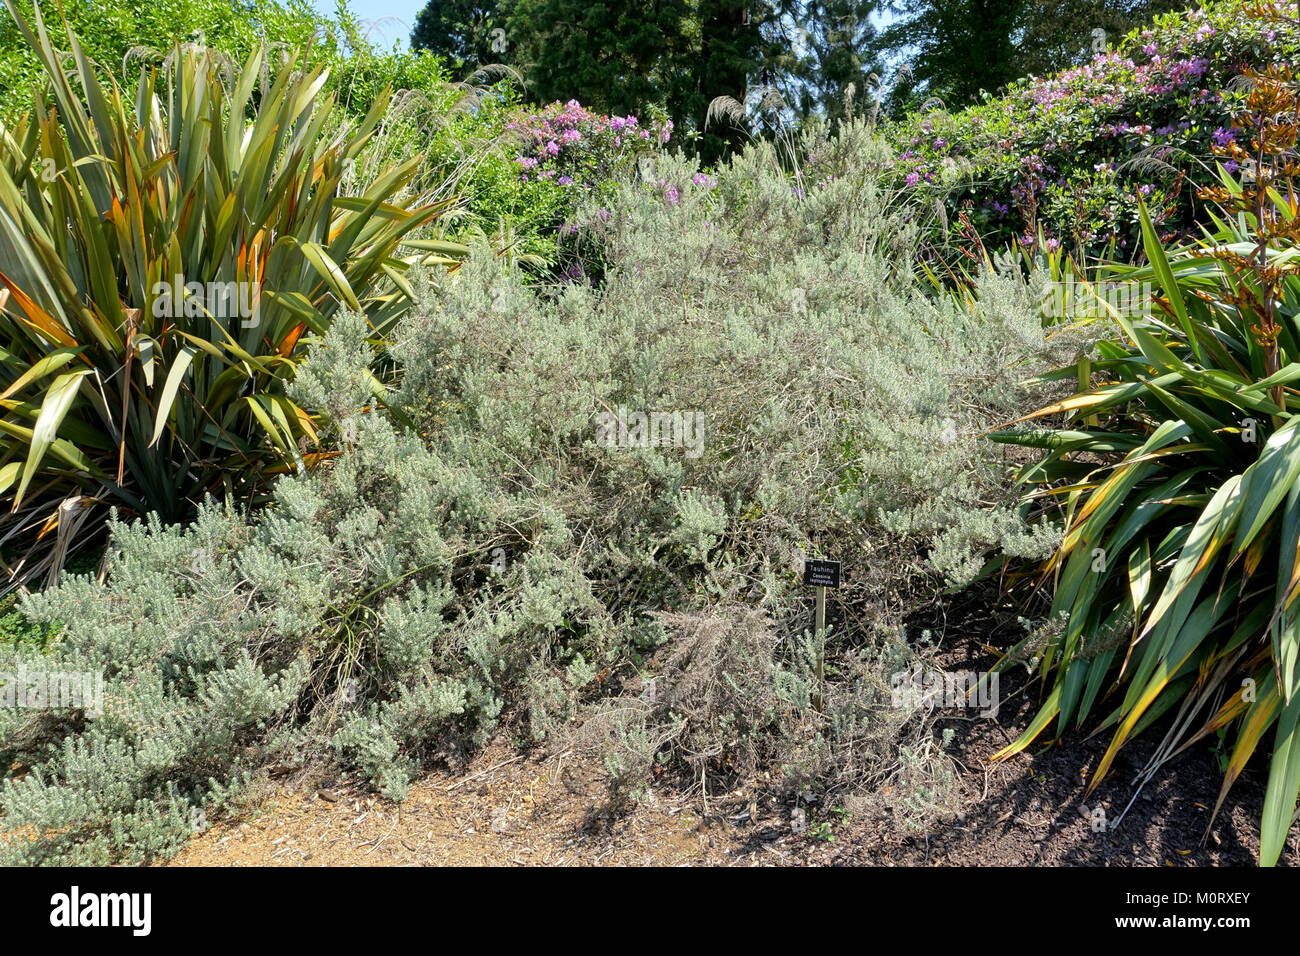 Cassinia leptophylla - Savill Garden - Windsor Great Park, England - DSC06000 Stock Photo